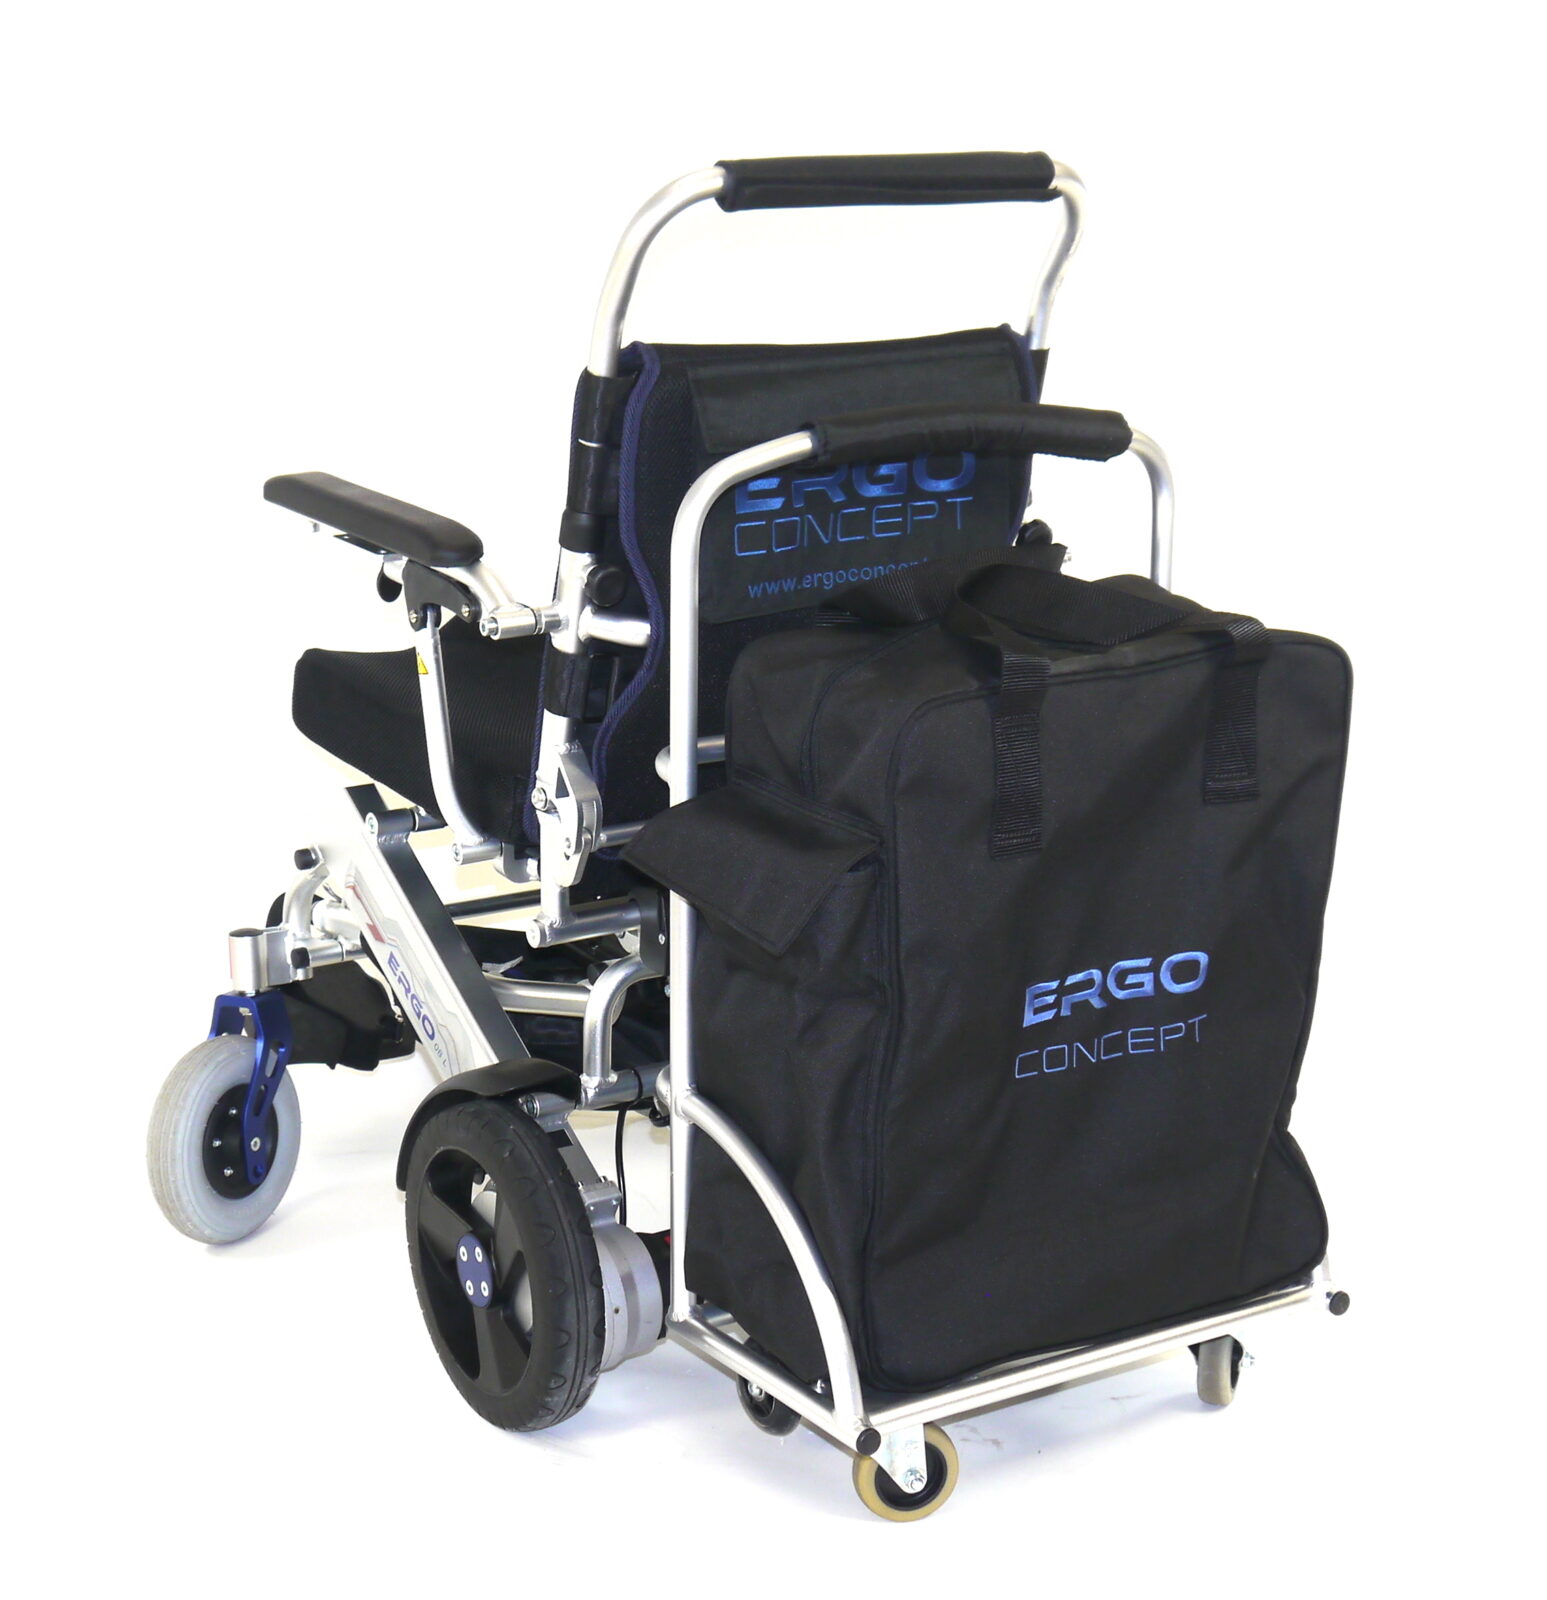 Accessoire Ergo07L - porte-bagage